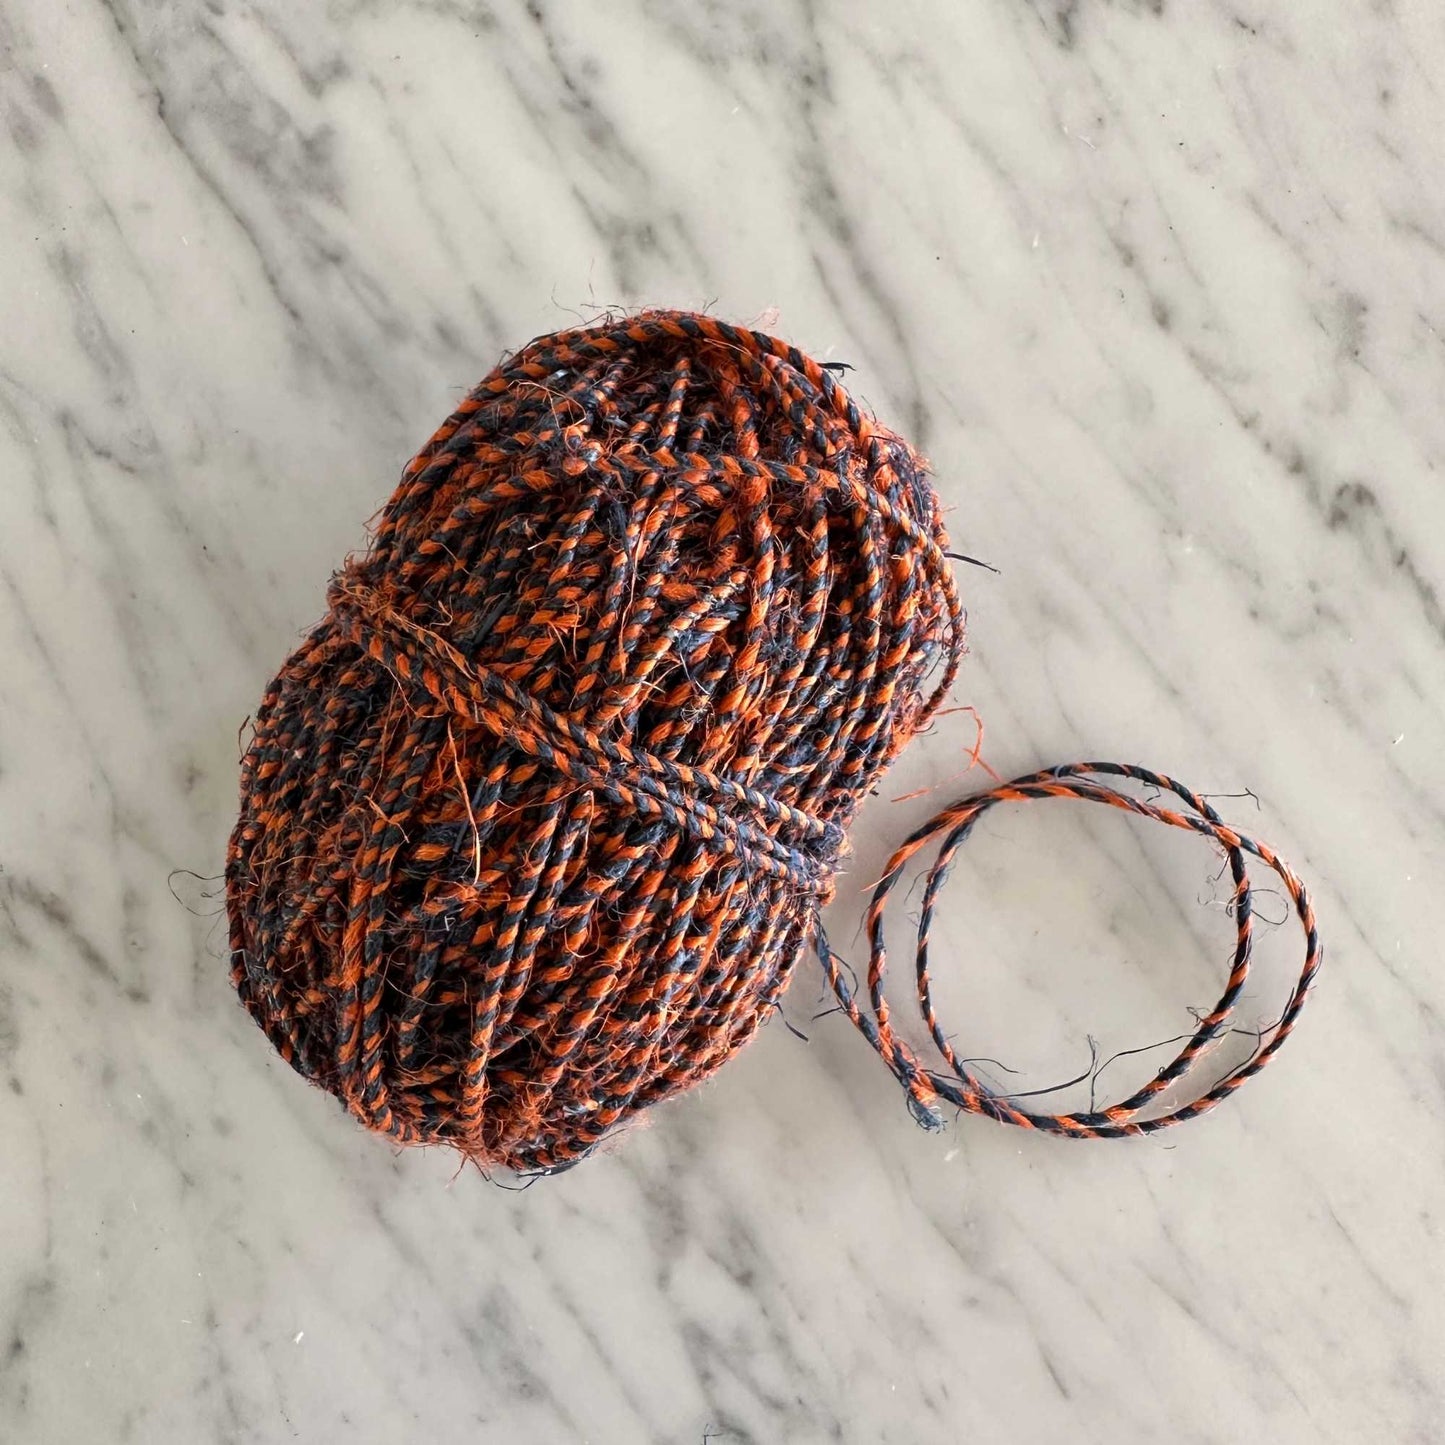 Tape Yarn, Textile Chunky Yarn for Crochet Bag, Rug, Basket